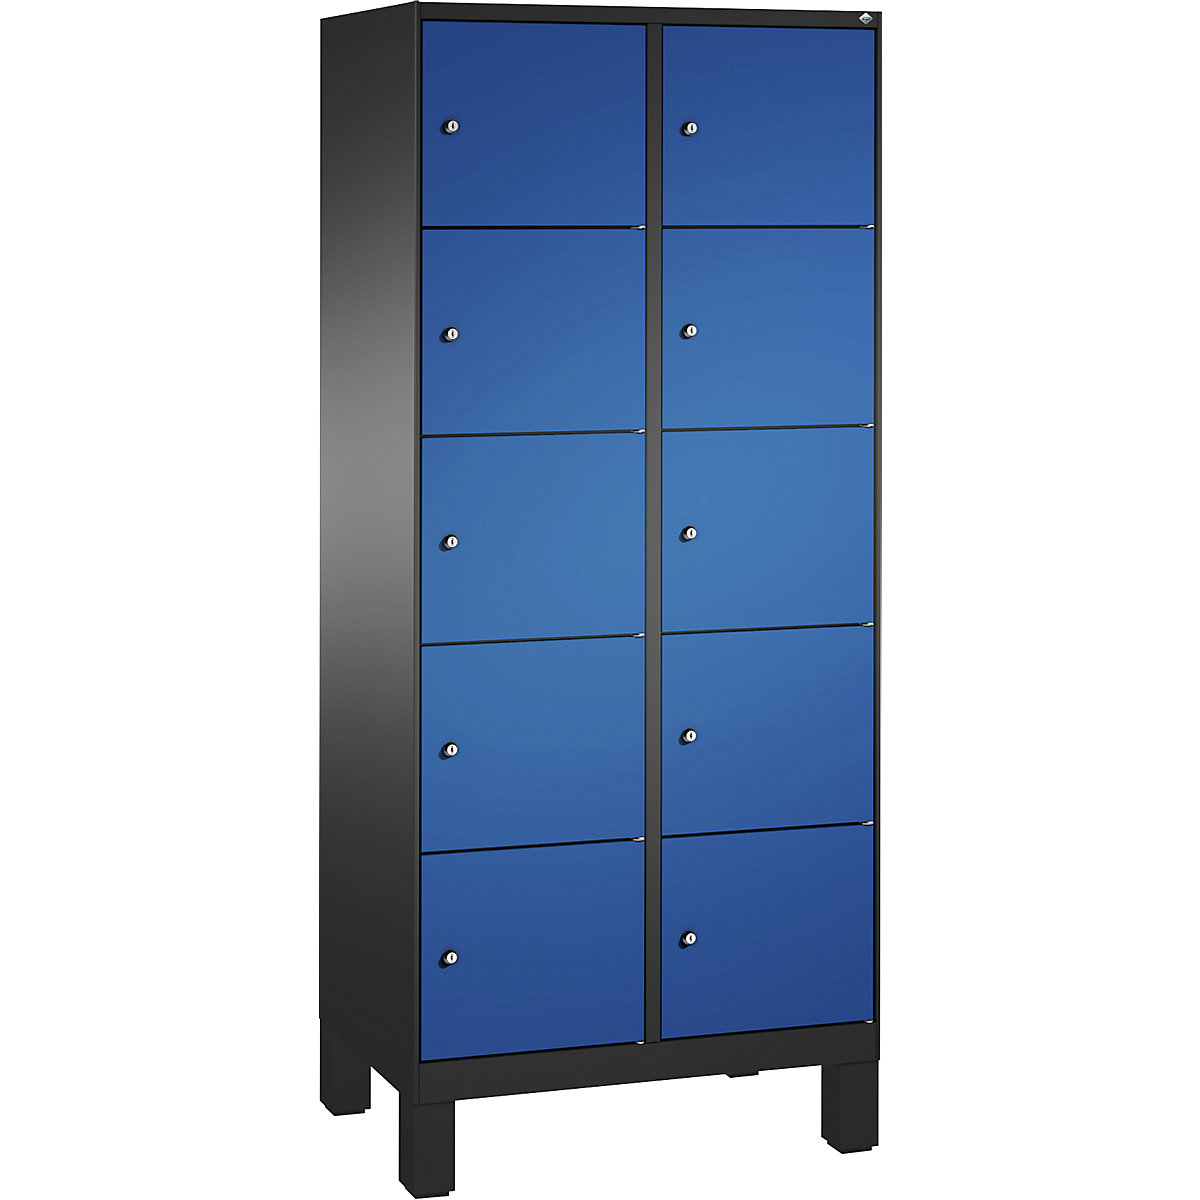 EVOLO locker unit, with feet – C+P, 2 compartments, 5 shelf compartments each, compartment width 400 mm, black grey / gentian blue-16